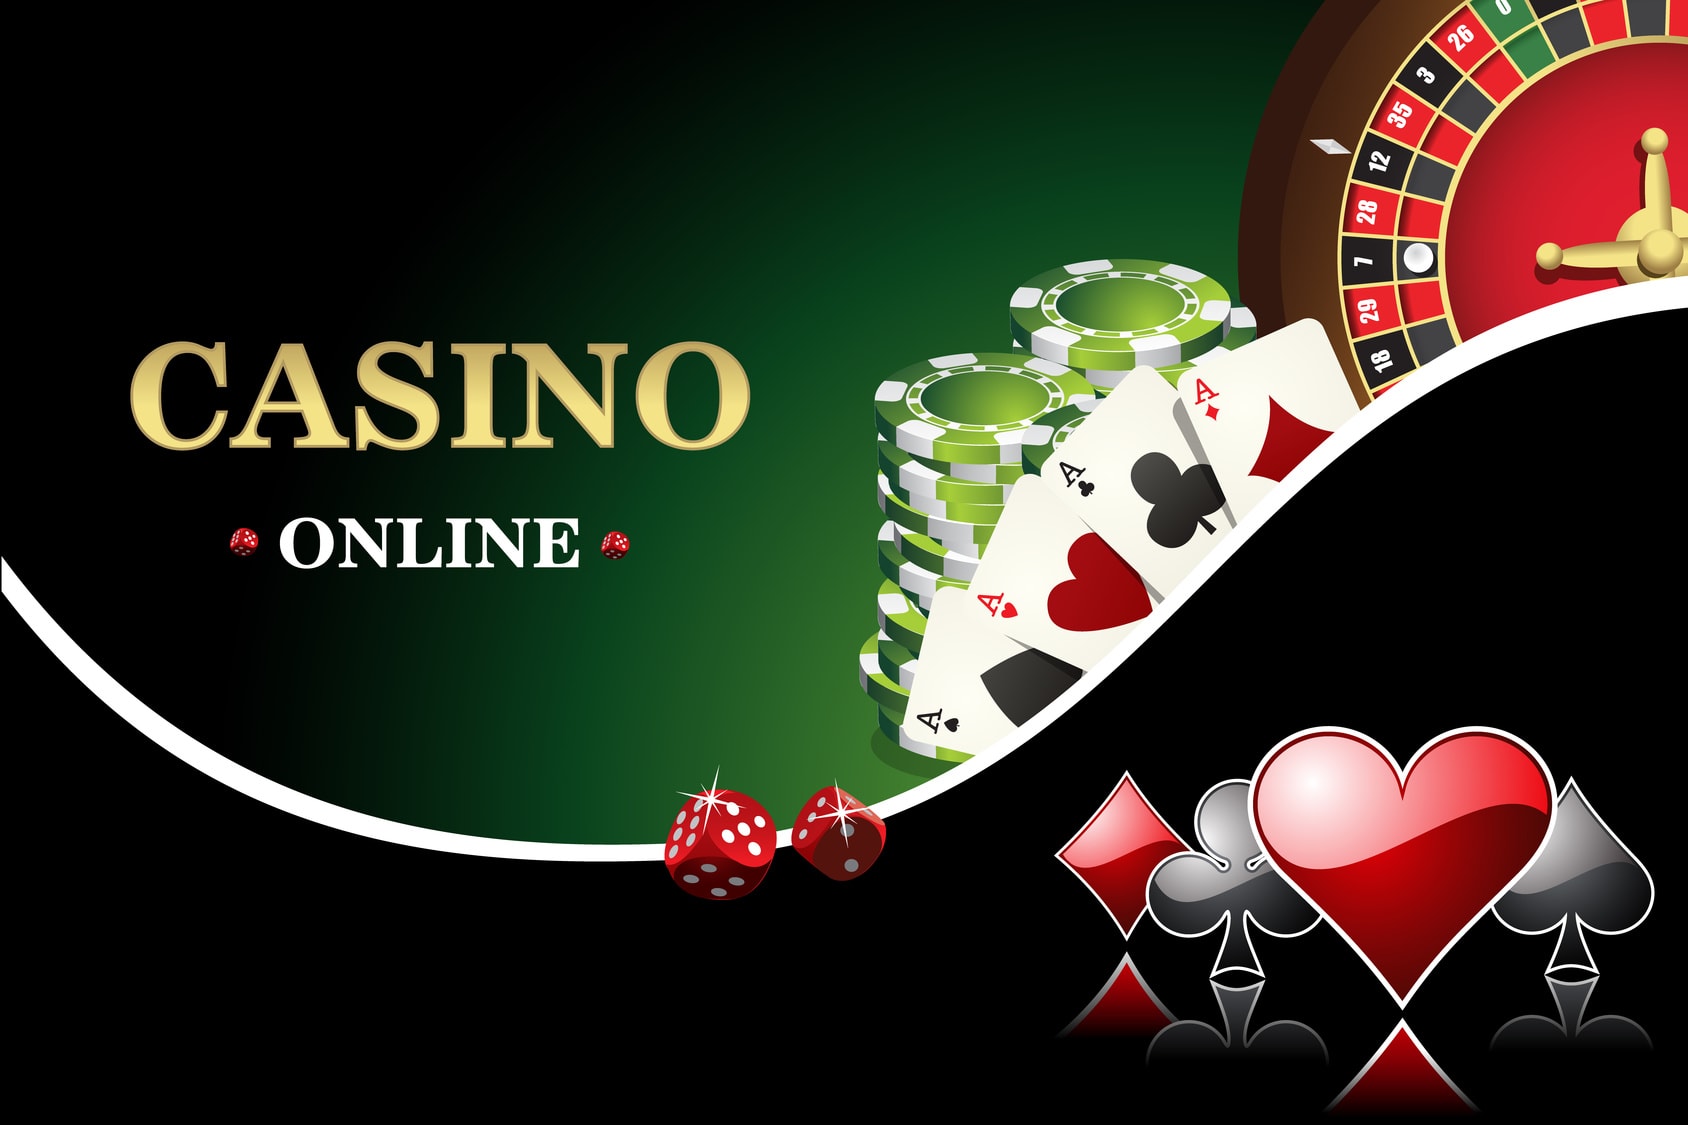 Online gambling platform SMTM by Pariplay